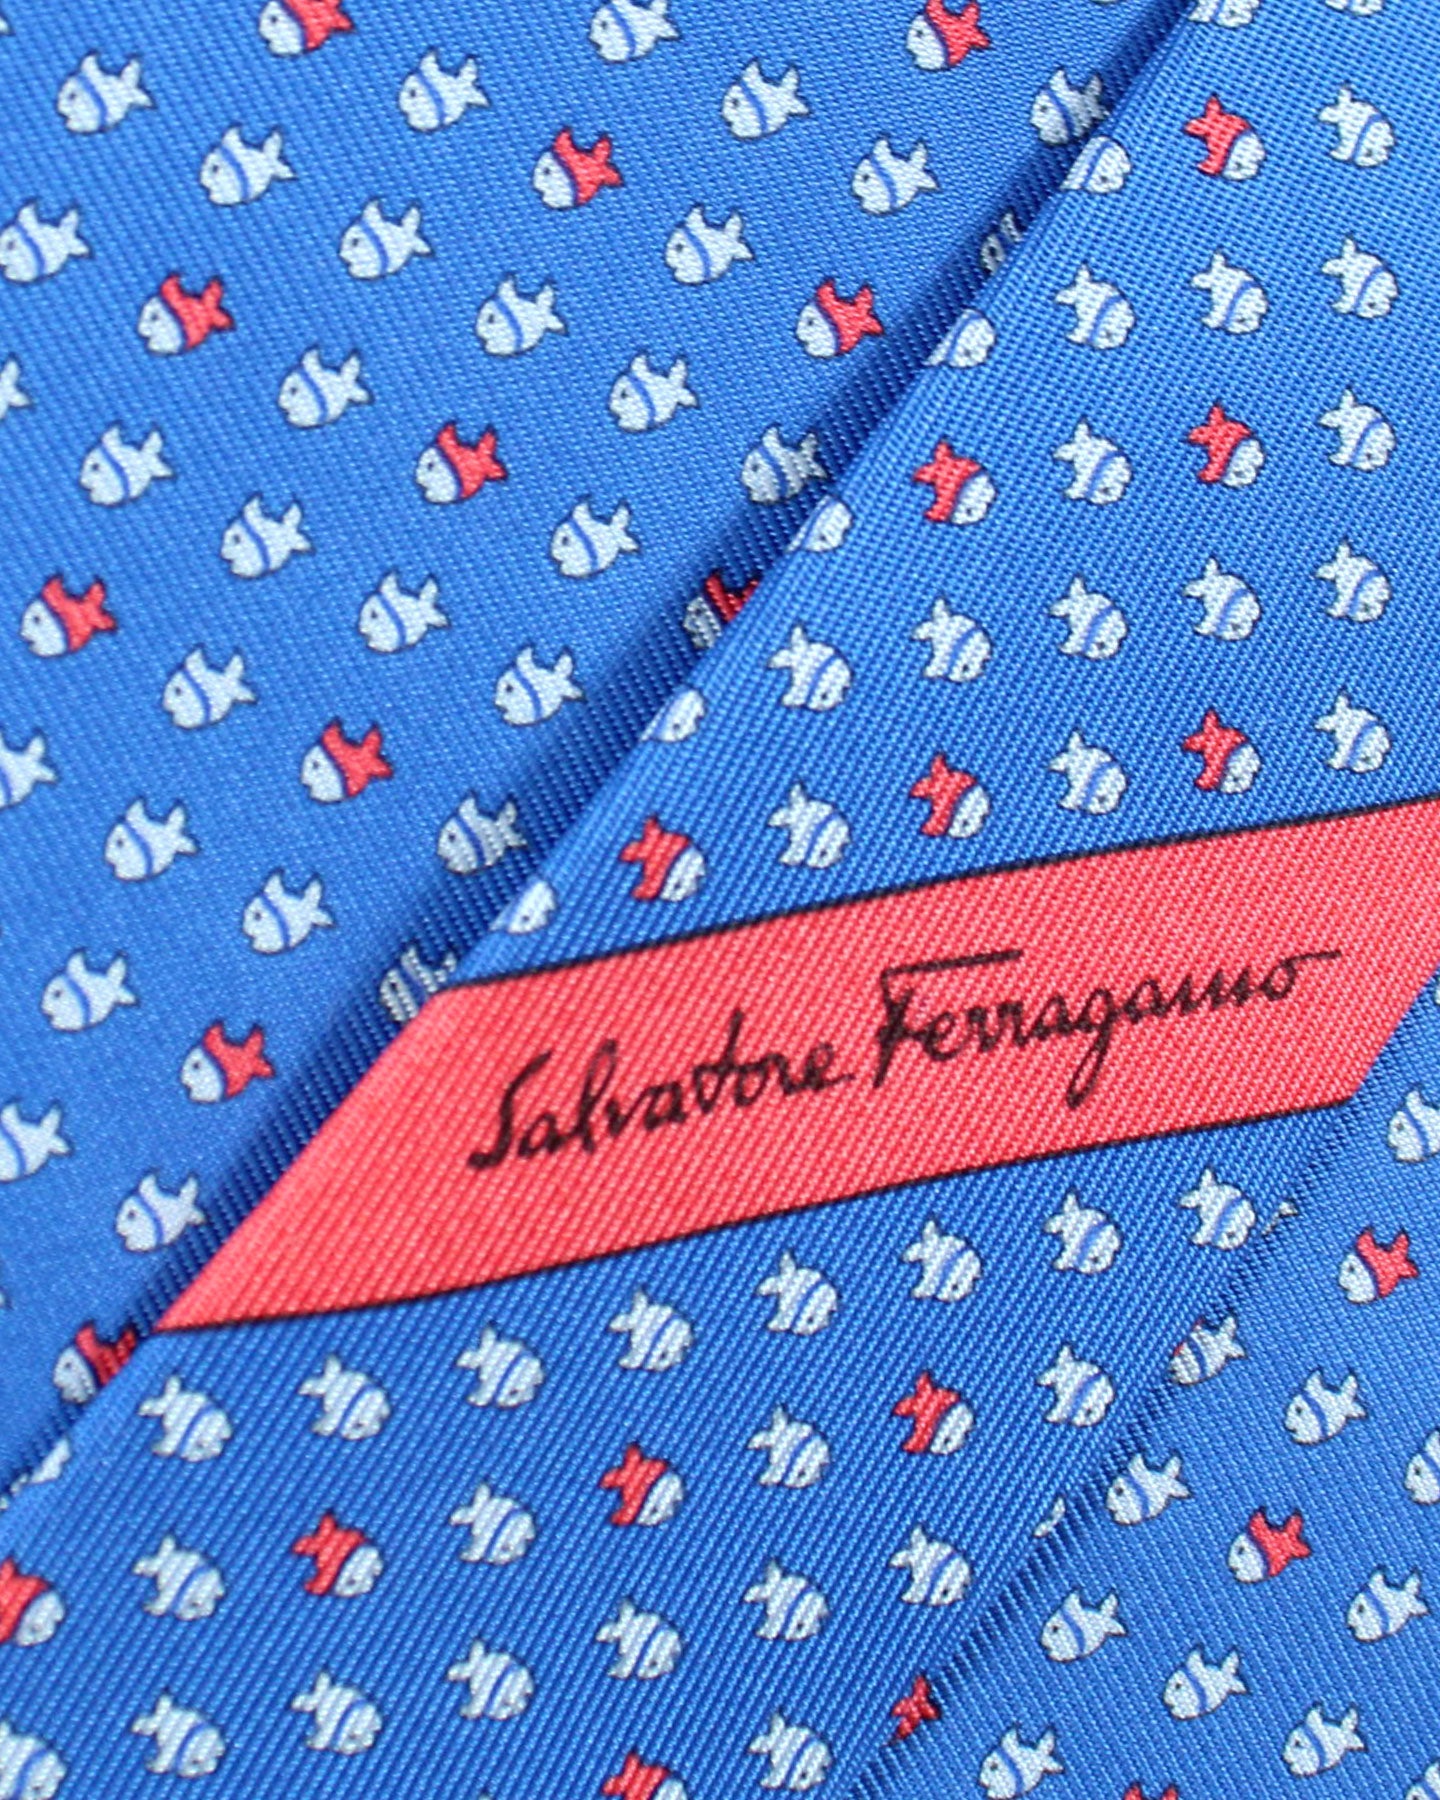 Salvatore Ferragamo Tie Royal Blue Fish - Novelty